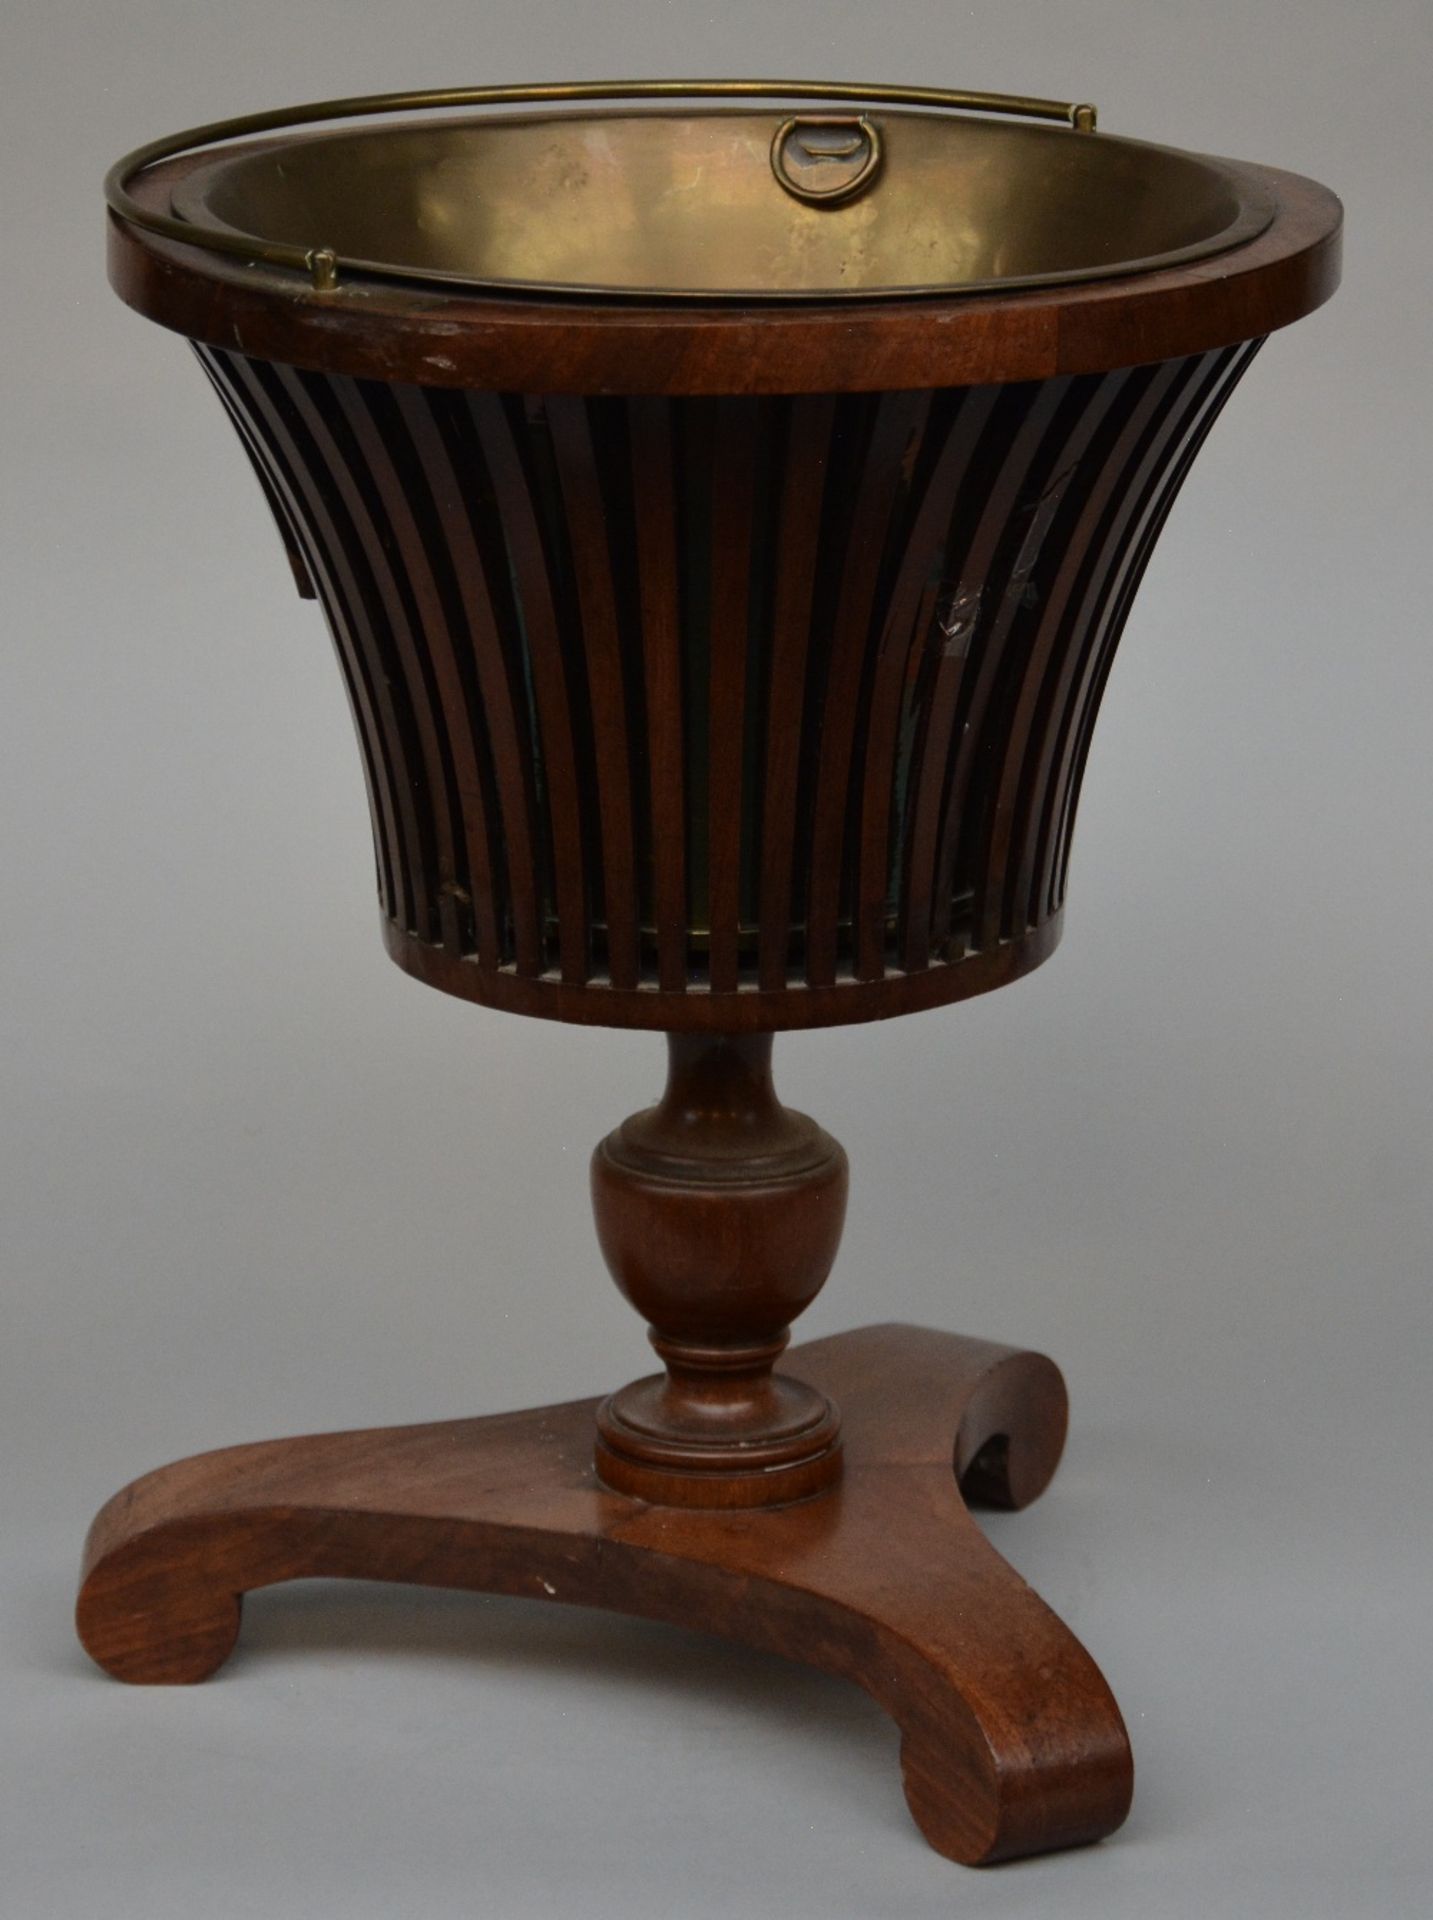 Mahogany and brass tea stove, 19thC, H 48 - Diameter 37,5 cm (minor damage) - Bild 4 aus 6